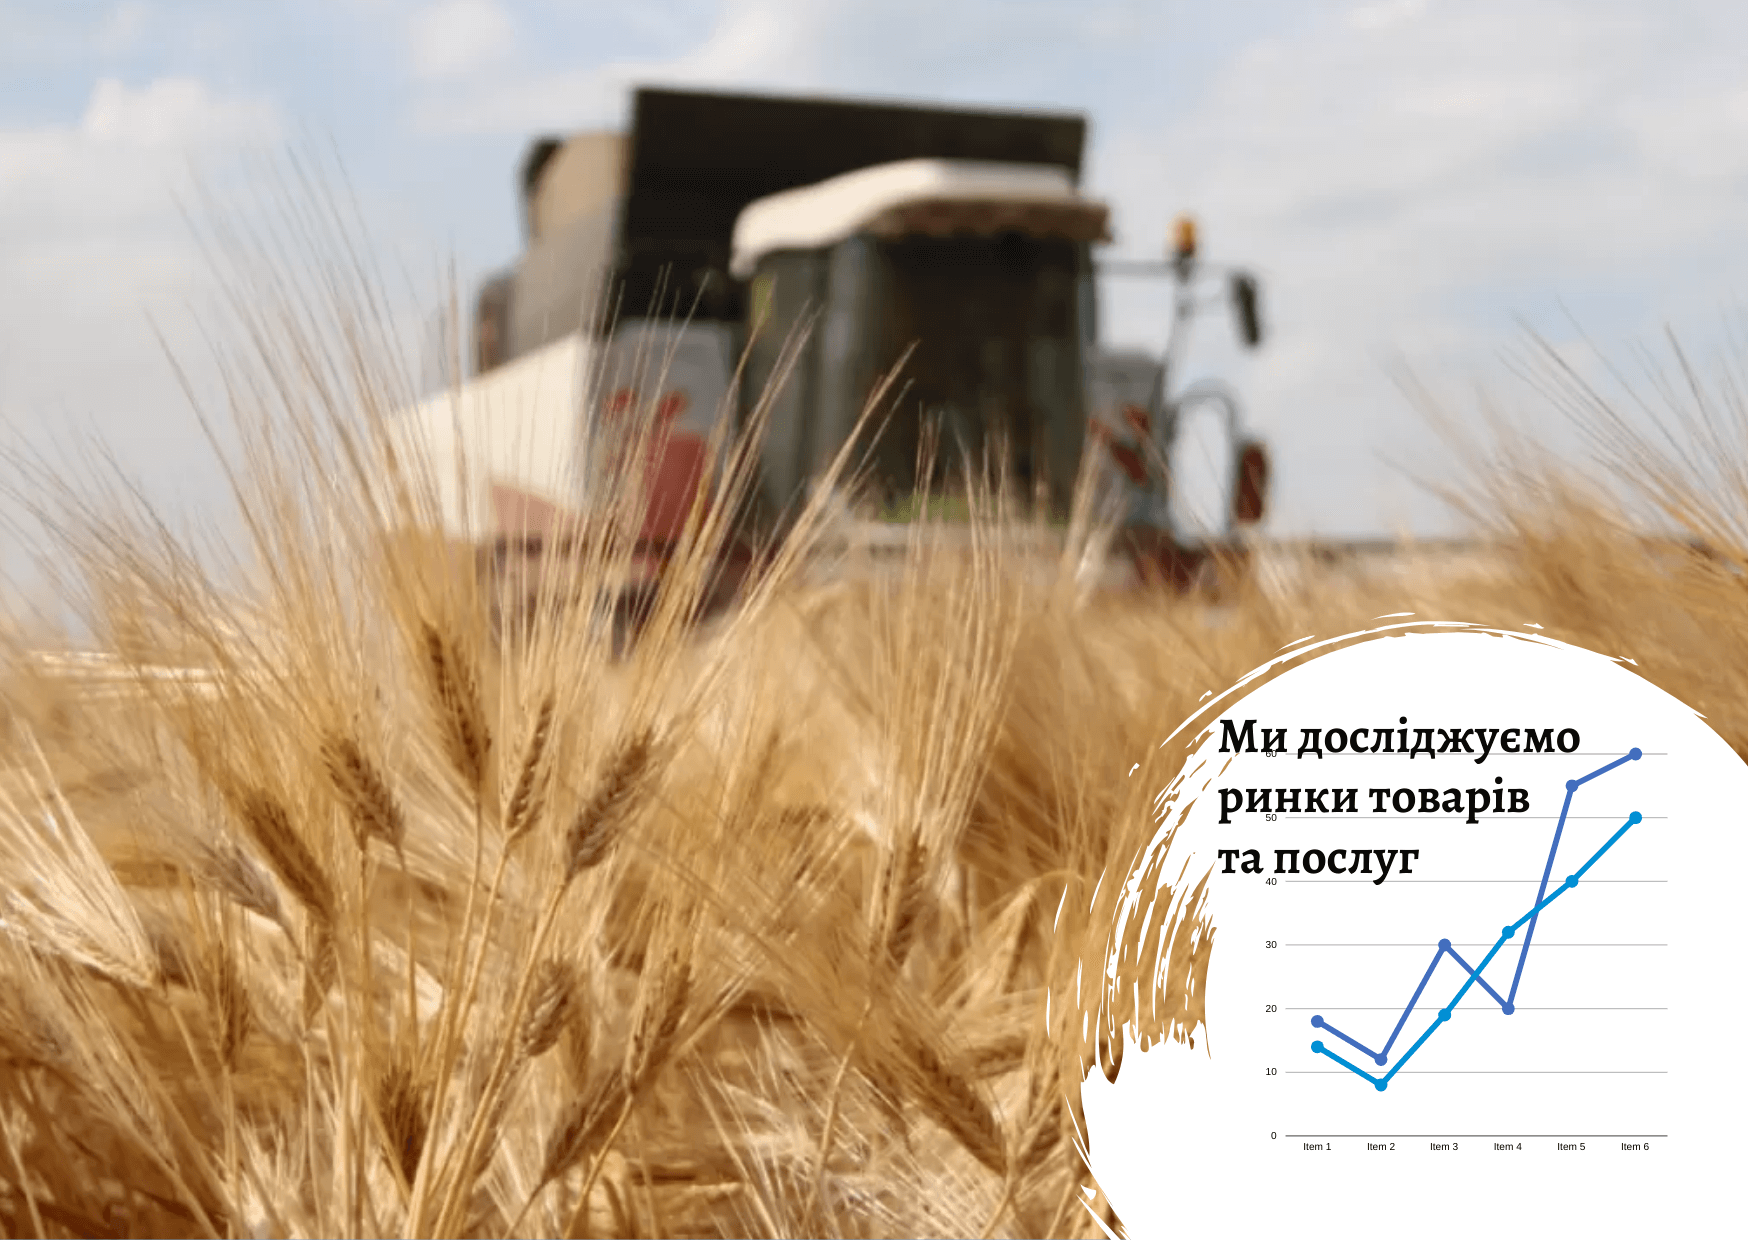 Ukrainian agricultural market: the war factor 